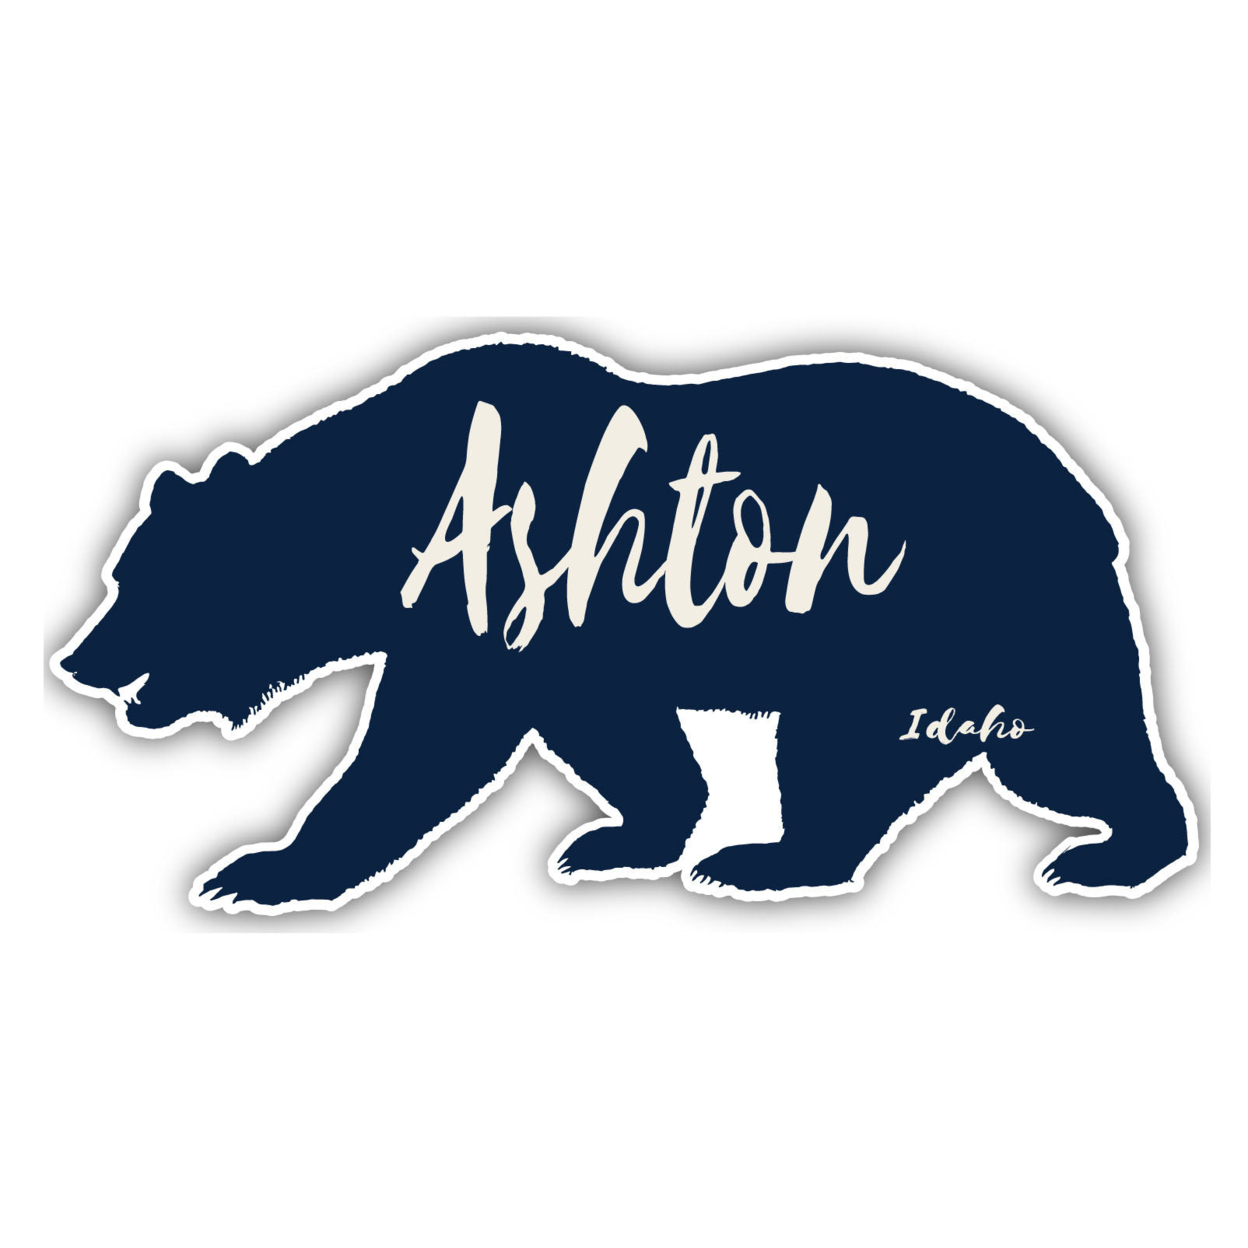 Ashton Idaho Souvenir Decorative Stickers (Choose Theme And Size) - 4-Pack, 2-Inch, Bear